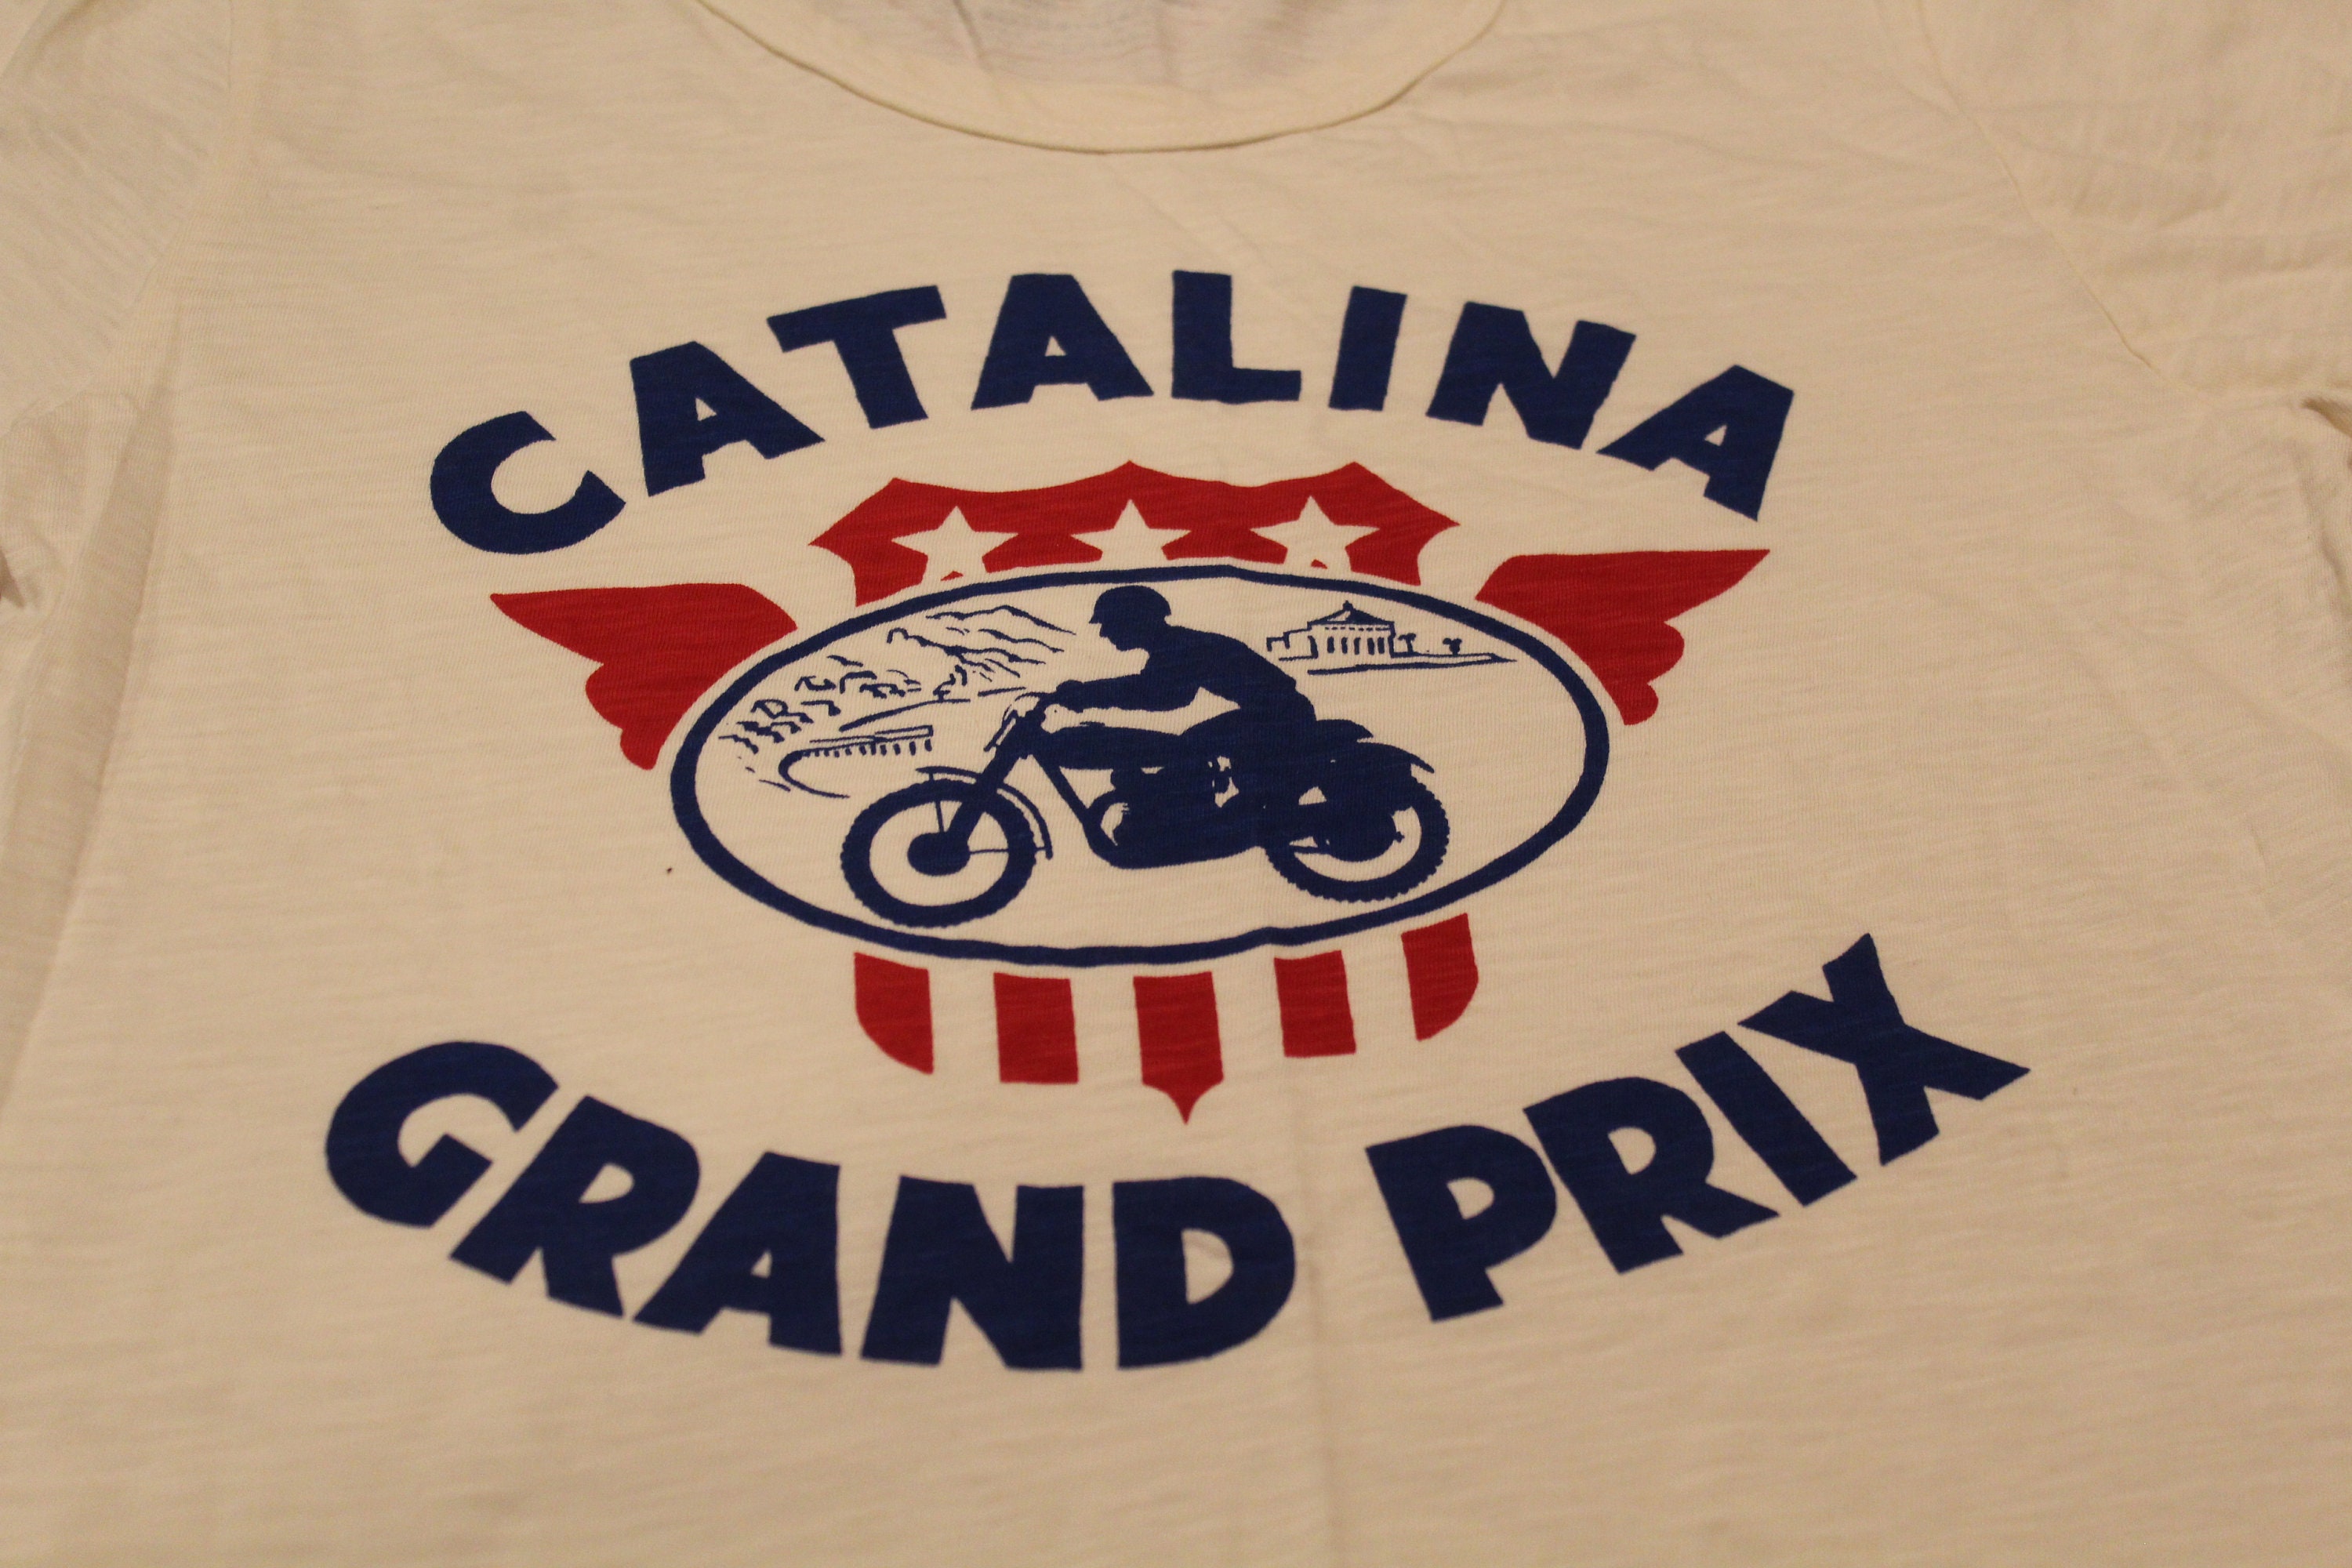 Johnson Motors 'Catalina Grand Prix' - Dirty White